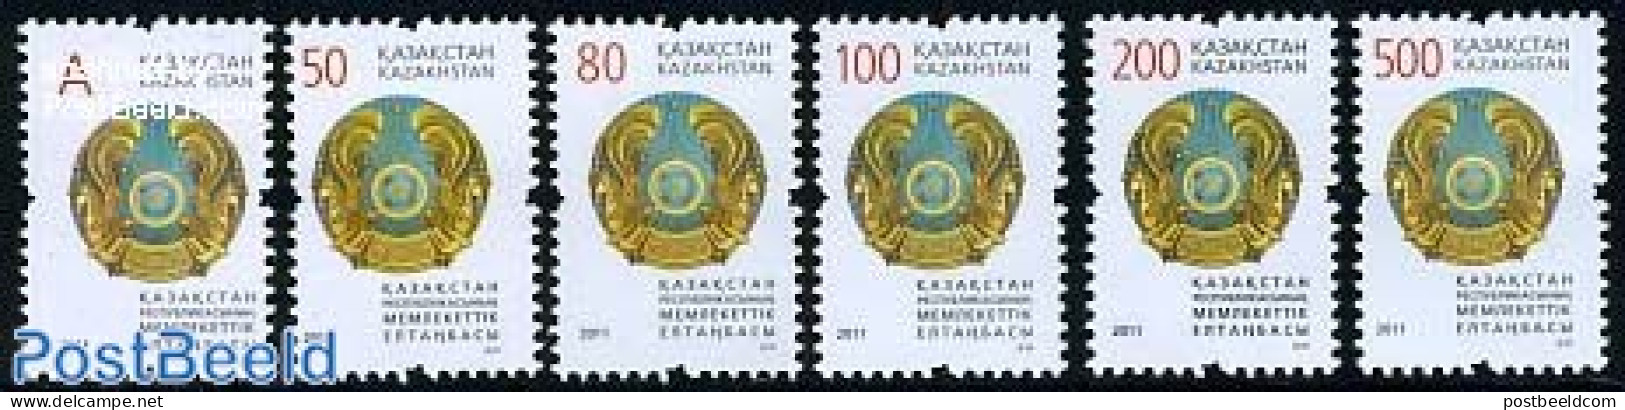 Kazakhstan 2011 Definitives, Coat Of Arms 6v, Mint NH, History - Coat Of Arms - Kazachstan